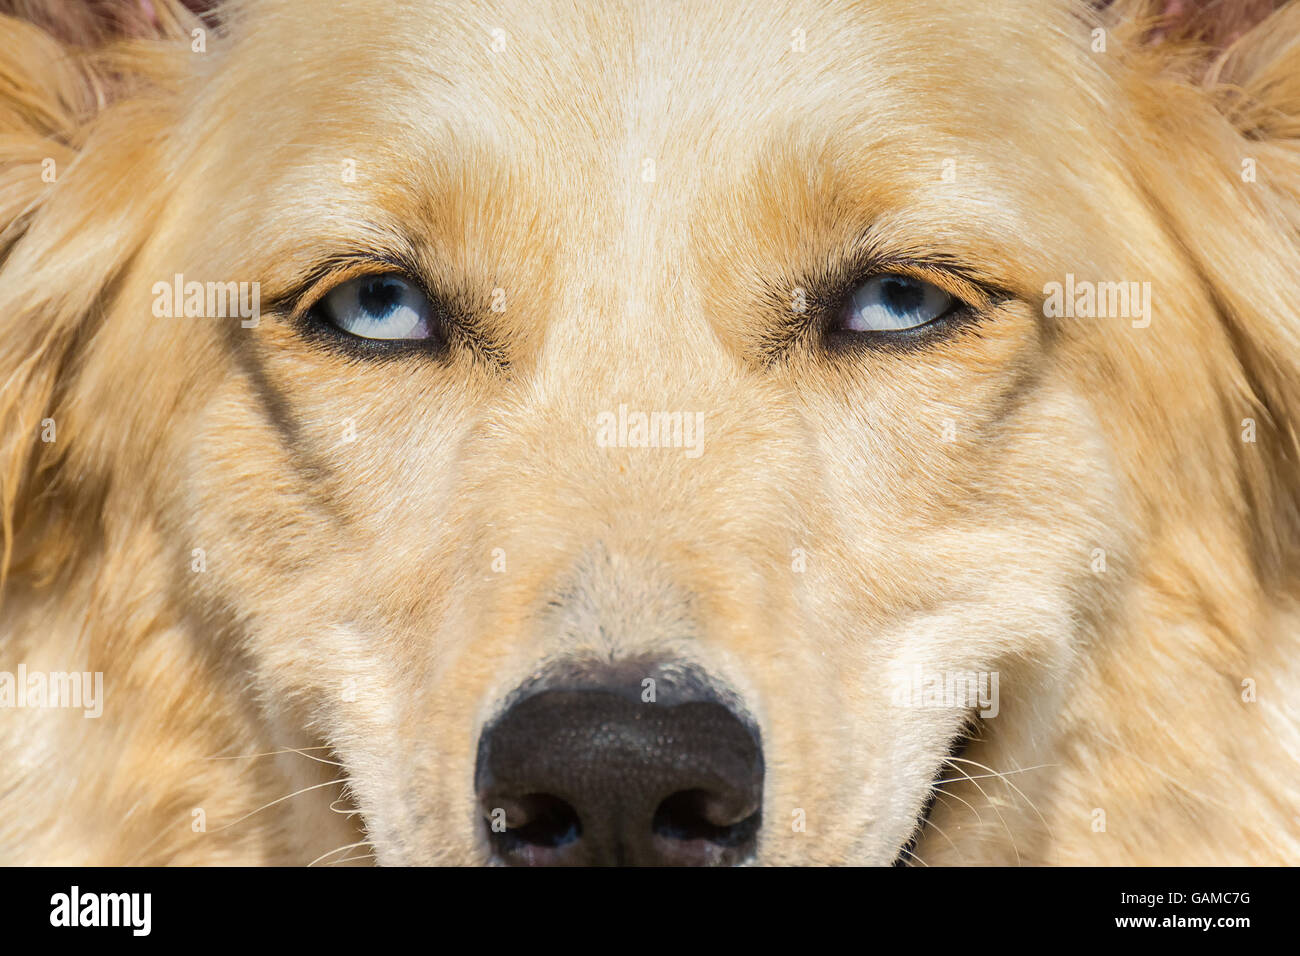 White Shepherd dog with blue eyes. A close up portrait. Stock Photo